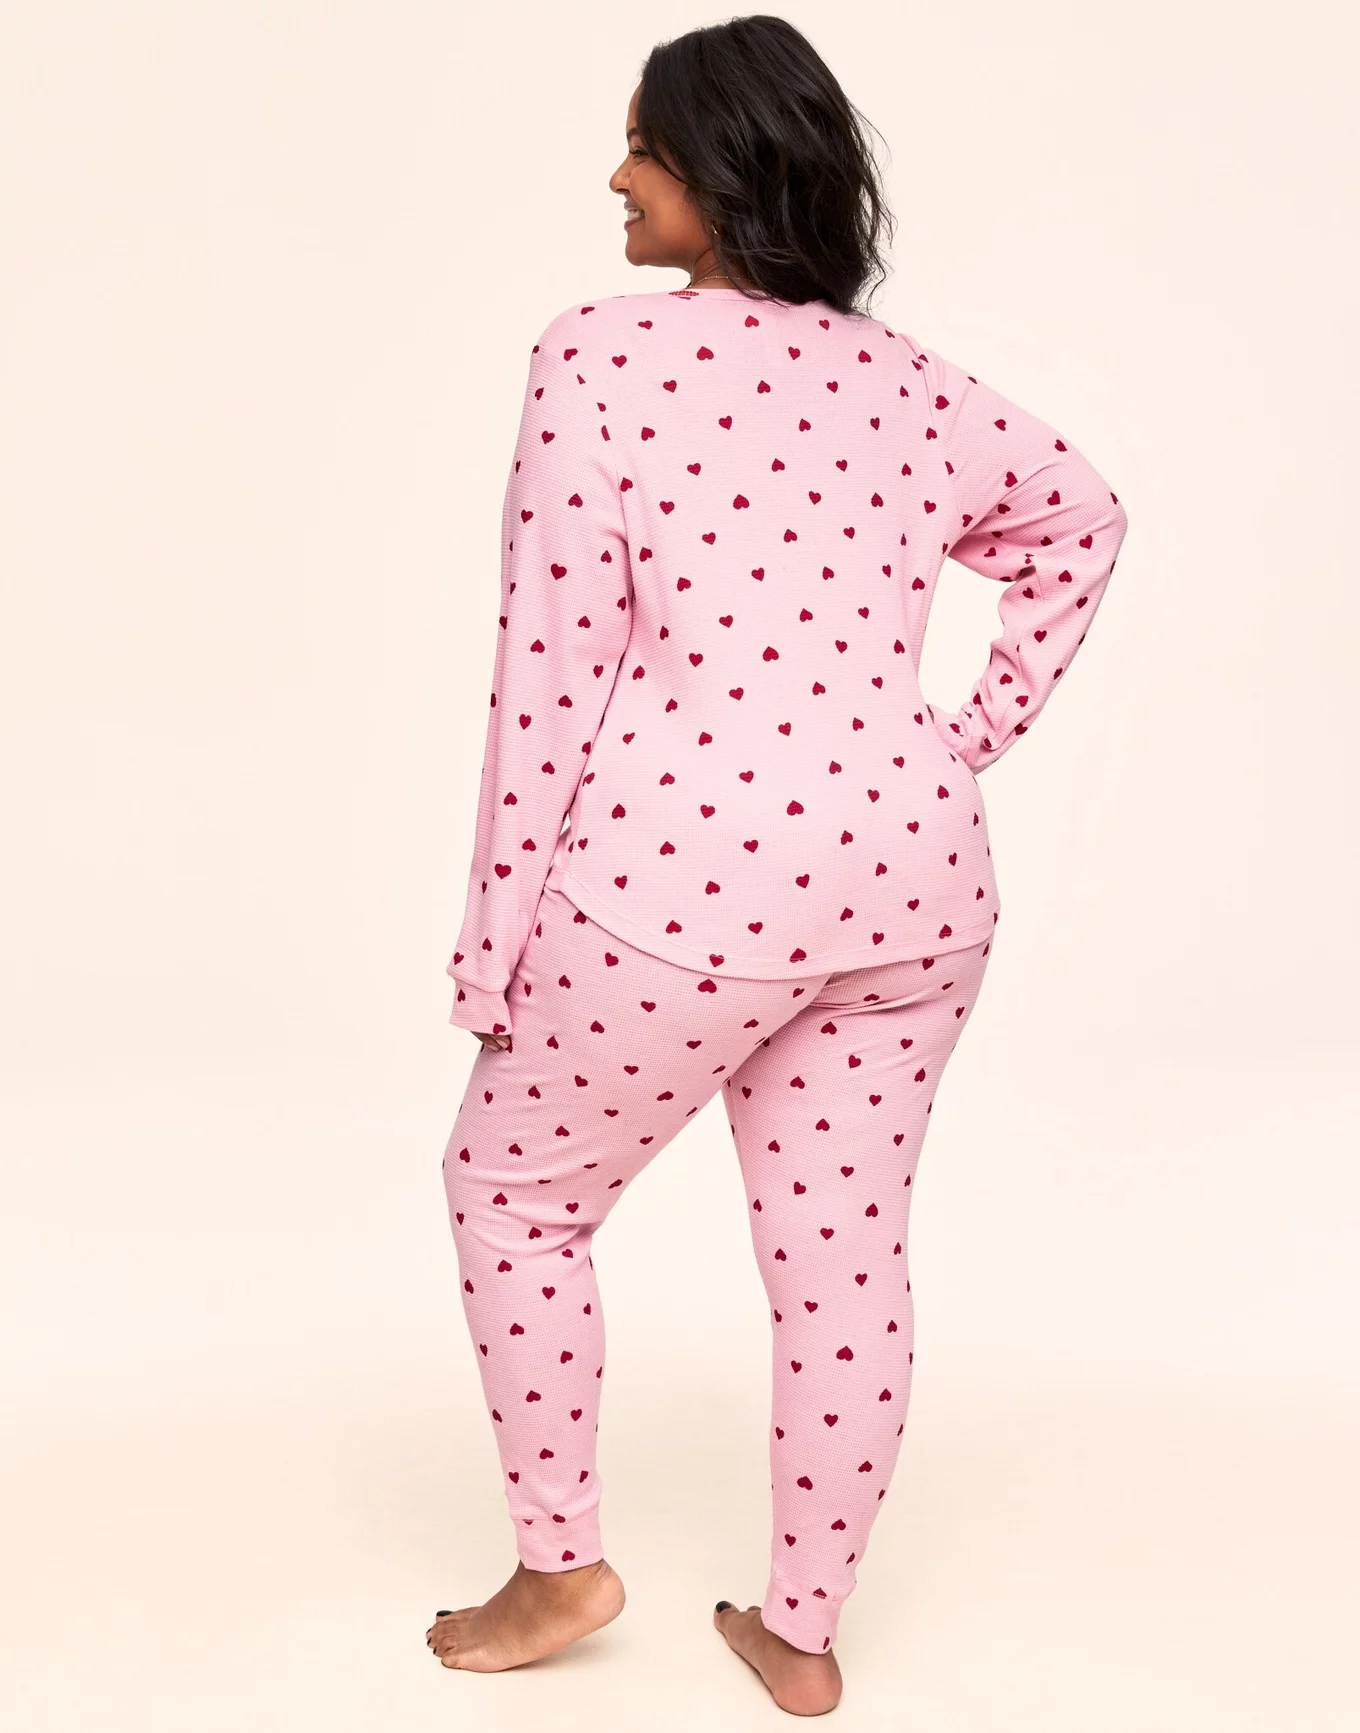 Muriel Heart Pink Plus Long Sleeve Top and Legging Set, XL-4X